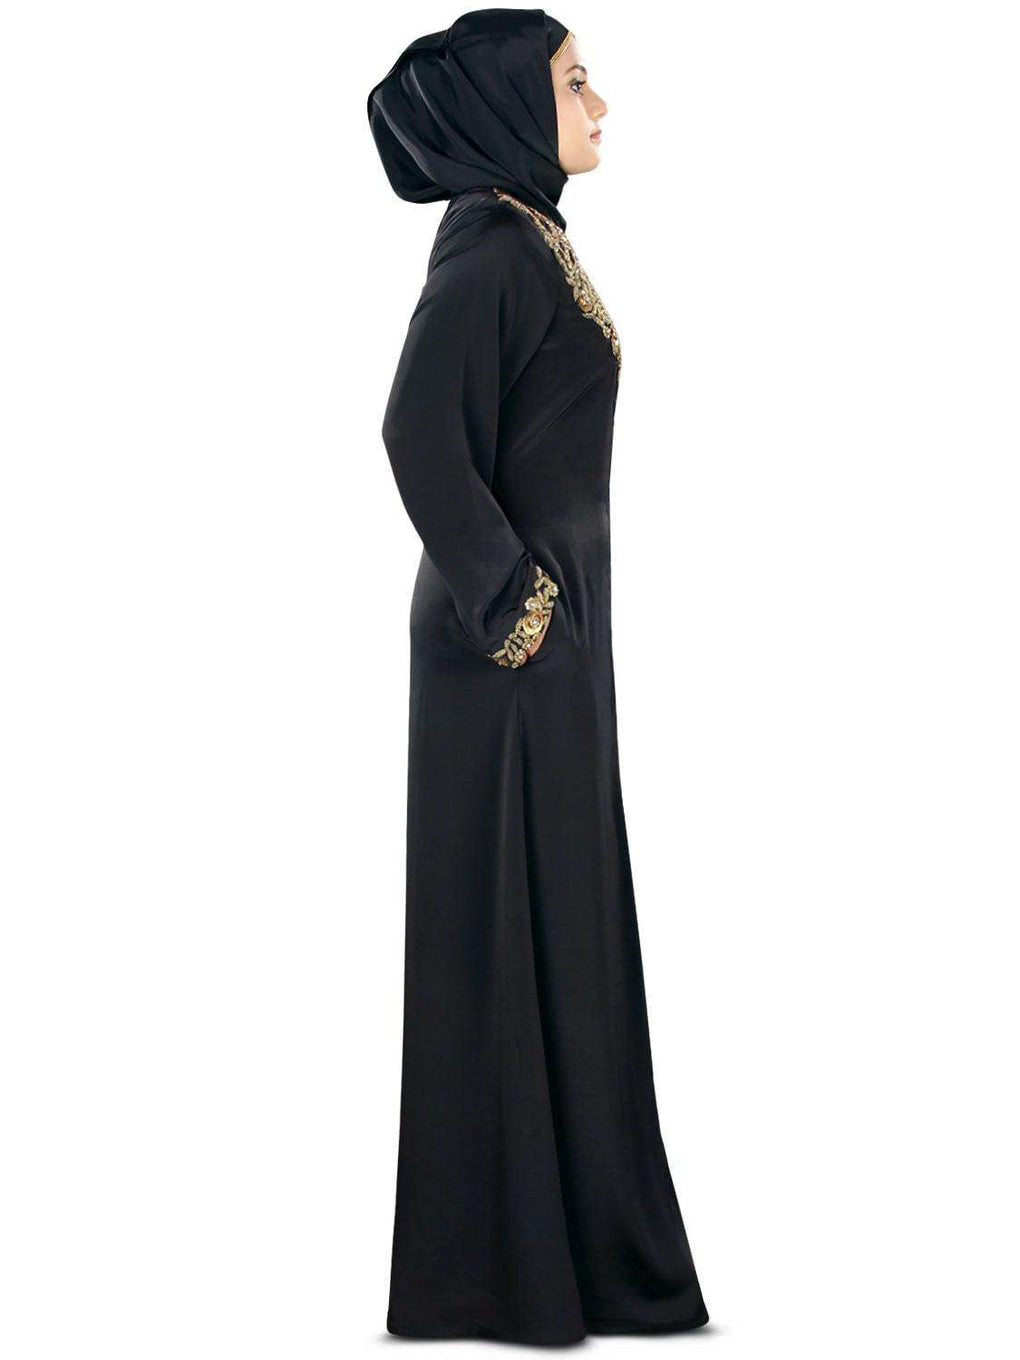 Fiddah Gold Hand Embroidered Burqa Side